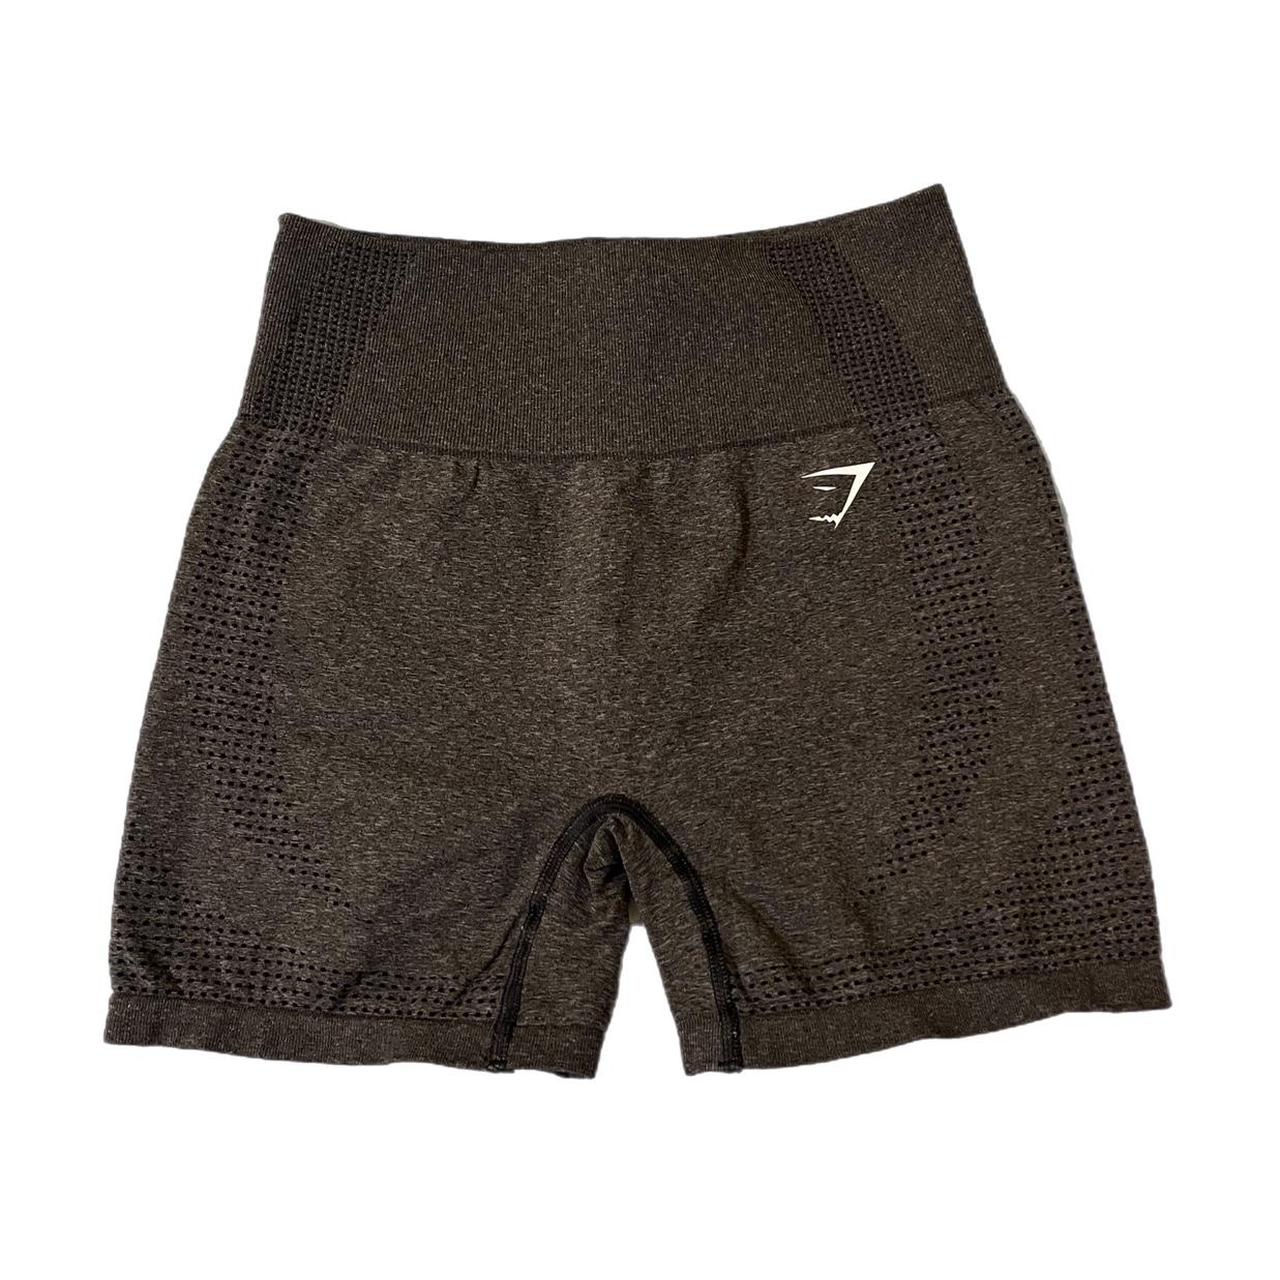 Grey Vital Seamless 2.0 Shorts, Size